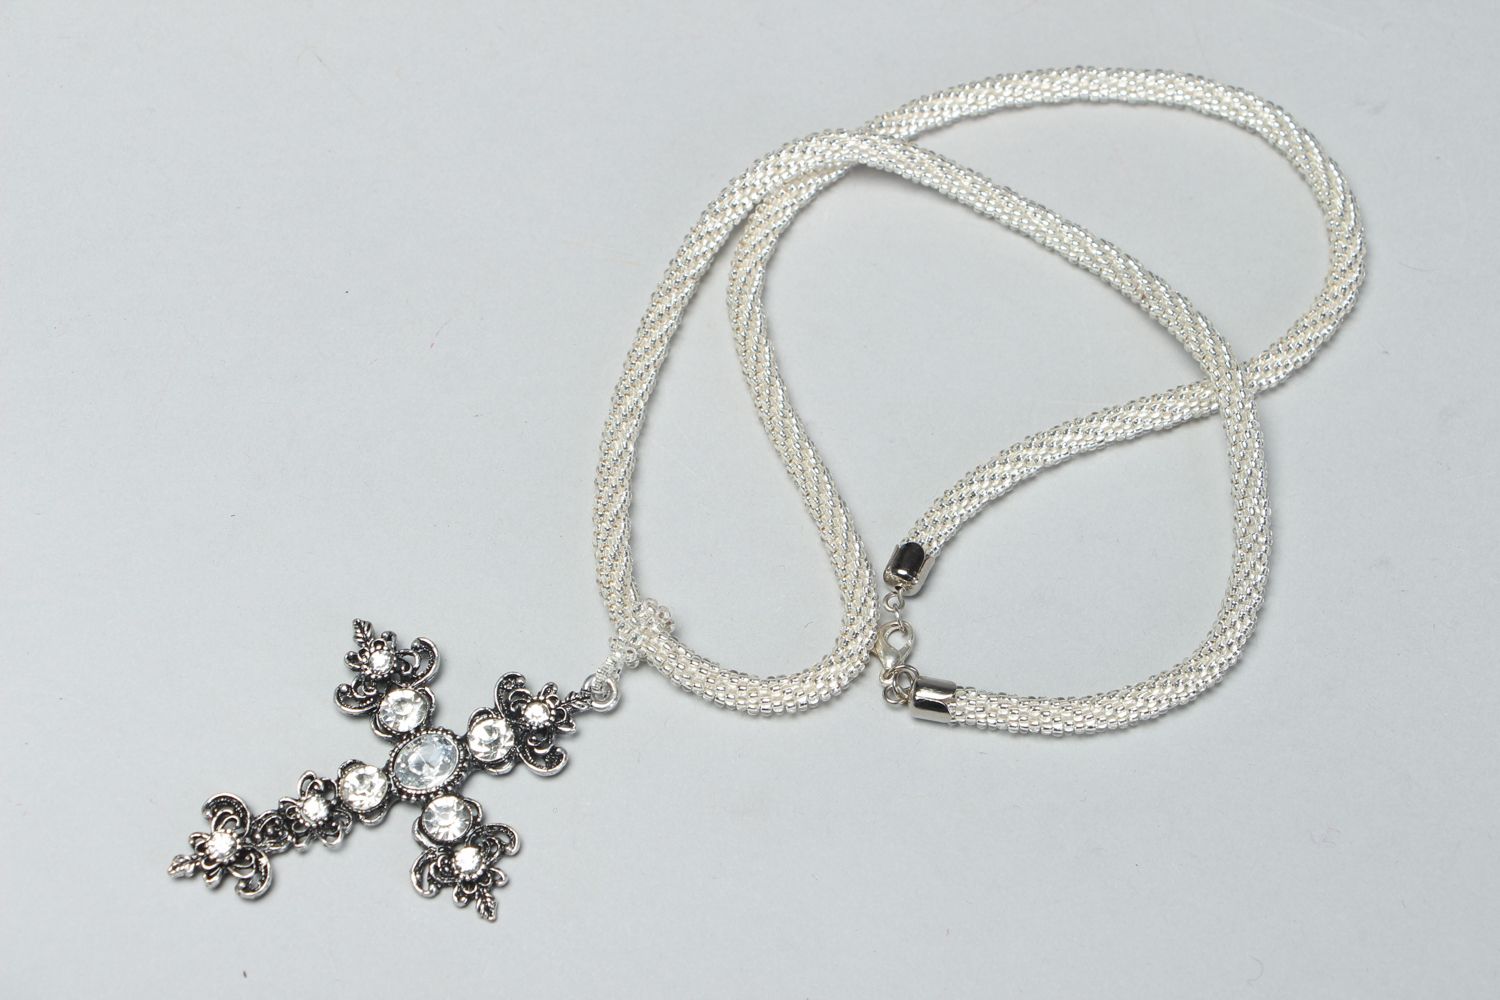 Beaded rosary neck jewelry photo 1